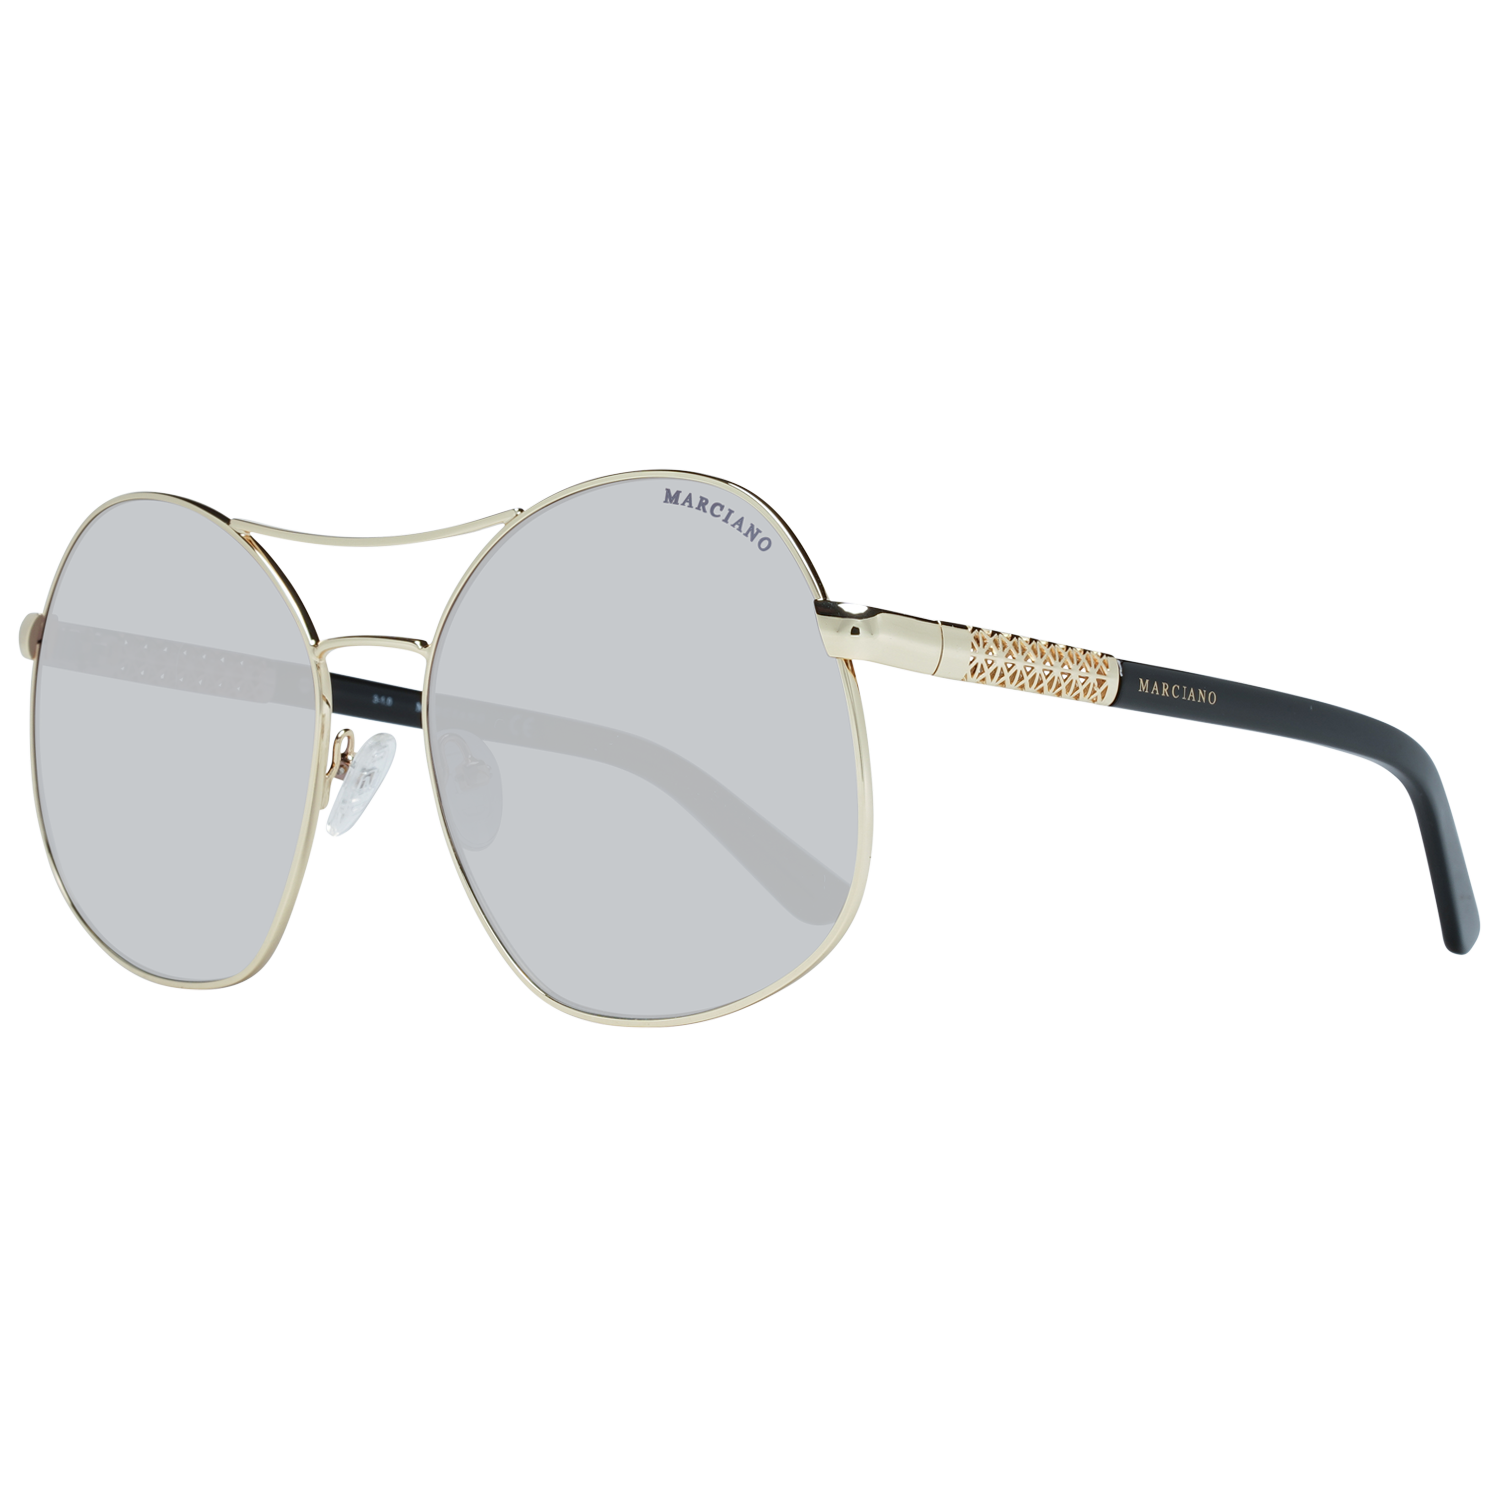 Marciano by Guess Sunglasses Marciano by Guess Sunglasses GM0807 32C 62 Eyeglasses Eyewear UK USA Australia 